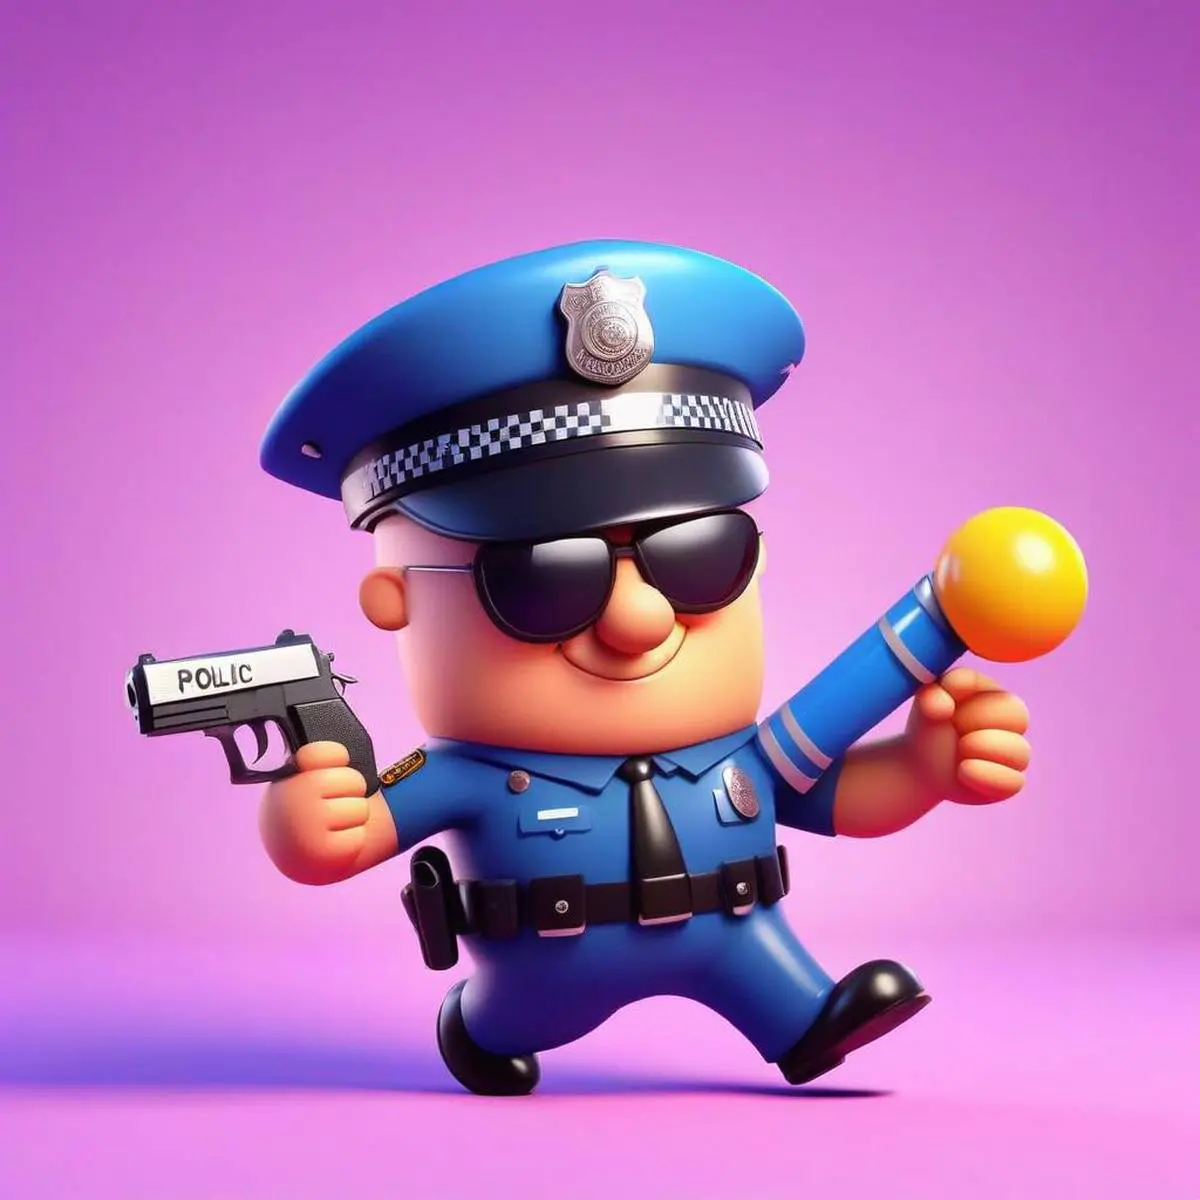 Police puns